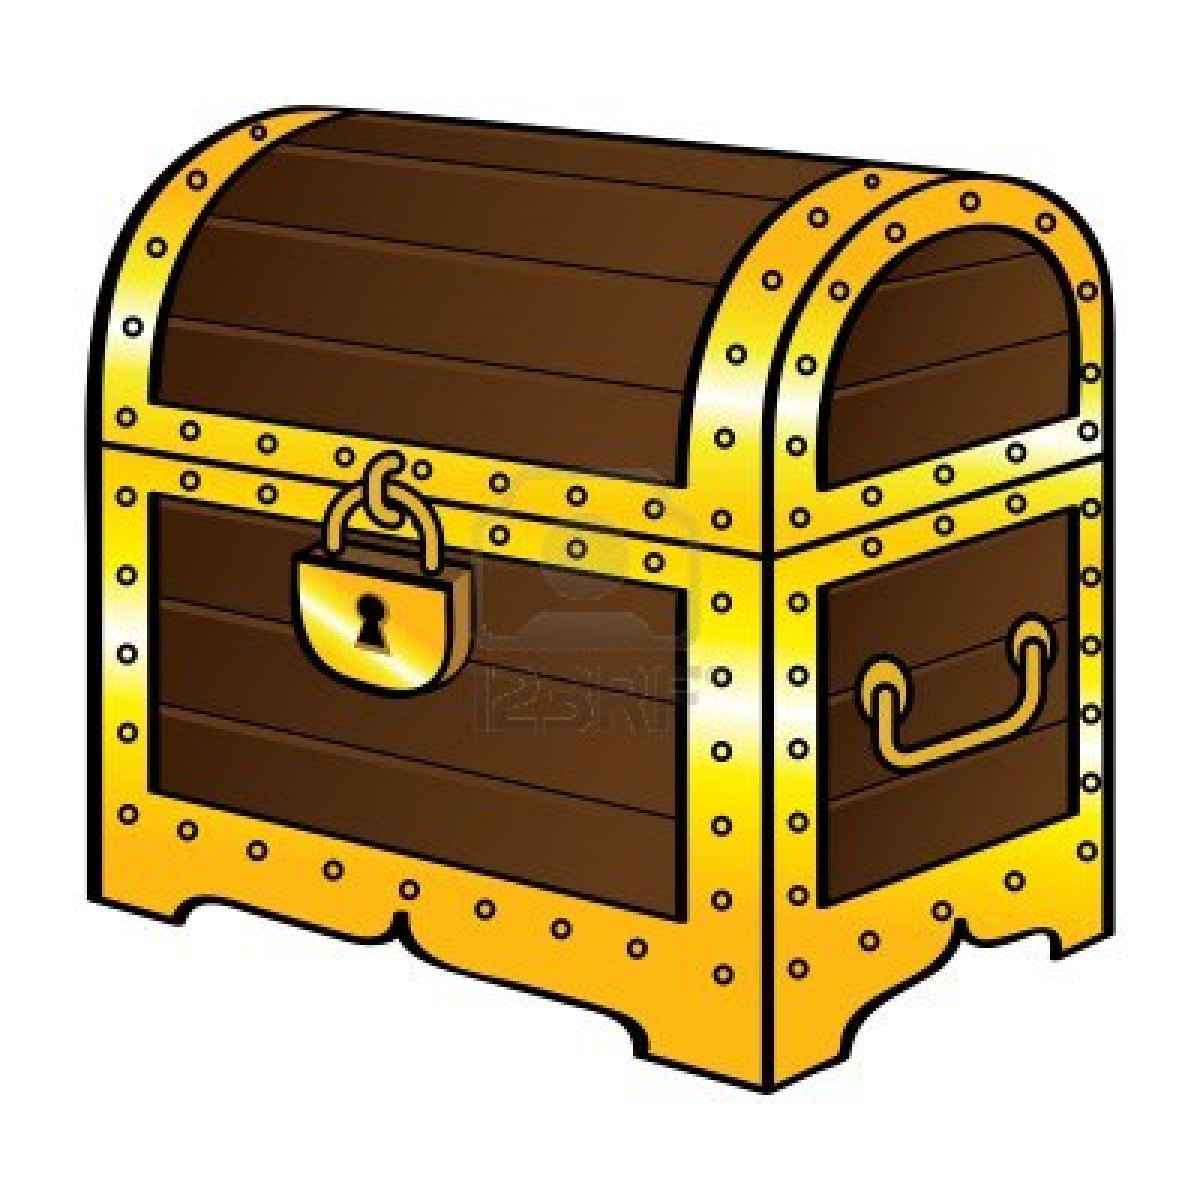 Closed Treasure Box Clipart Displaying 14 Good Pix For Closed Treasure